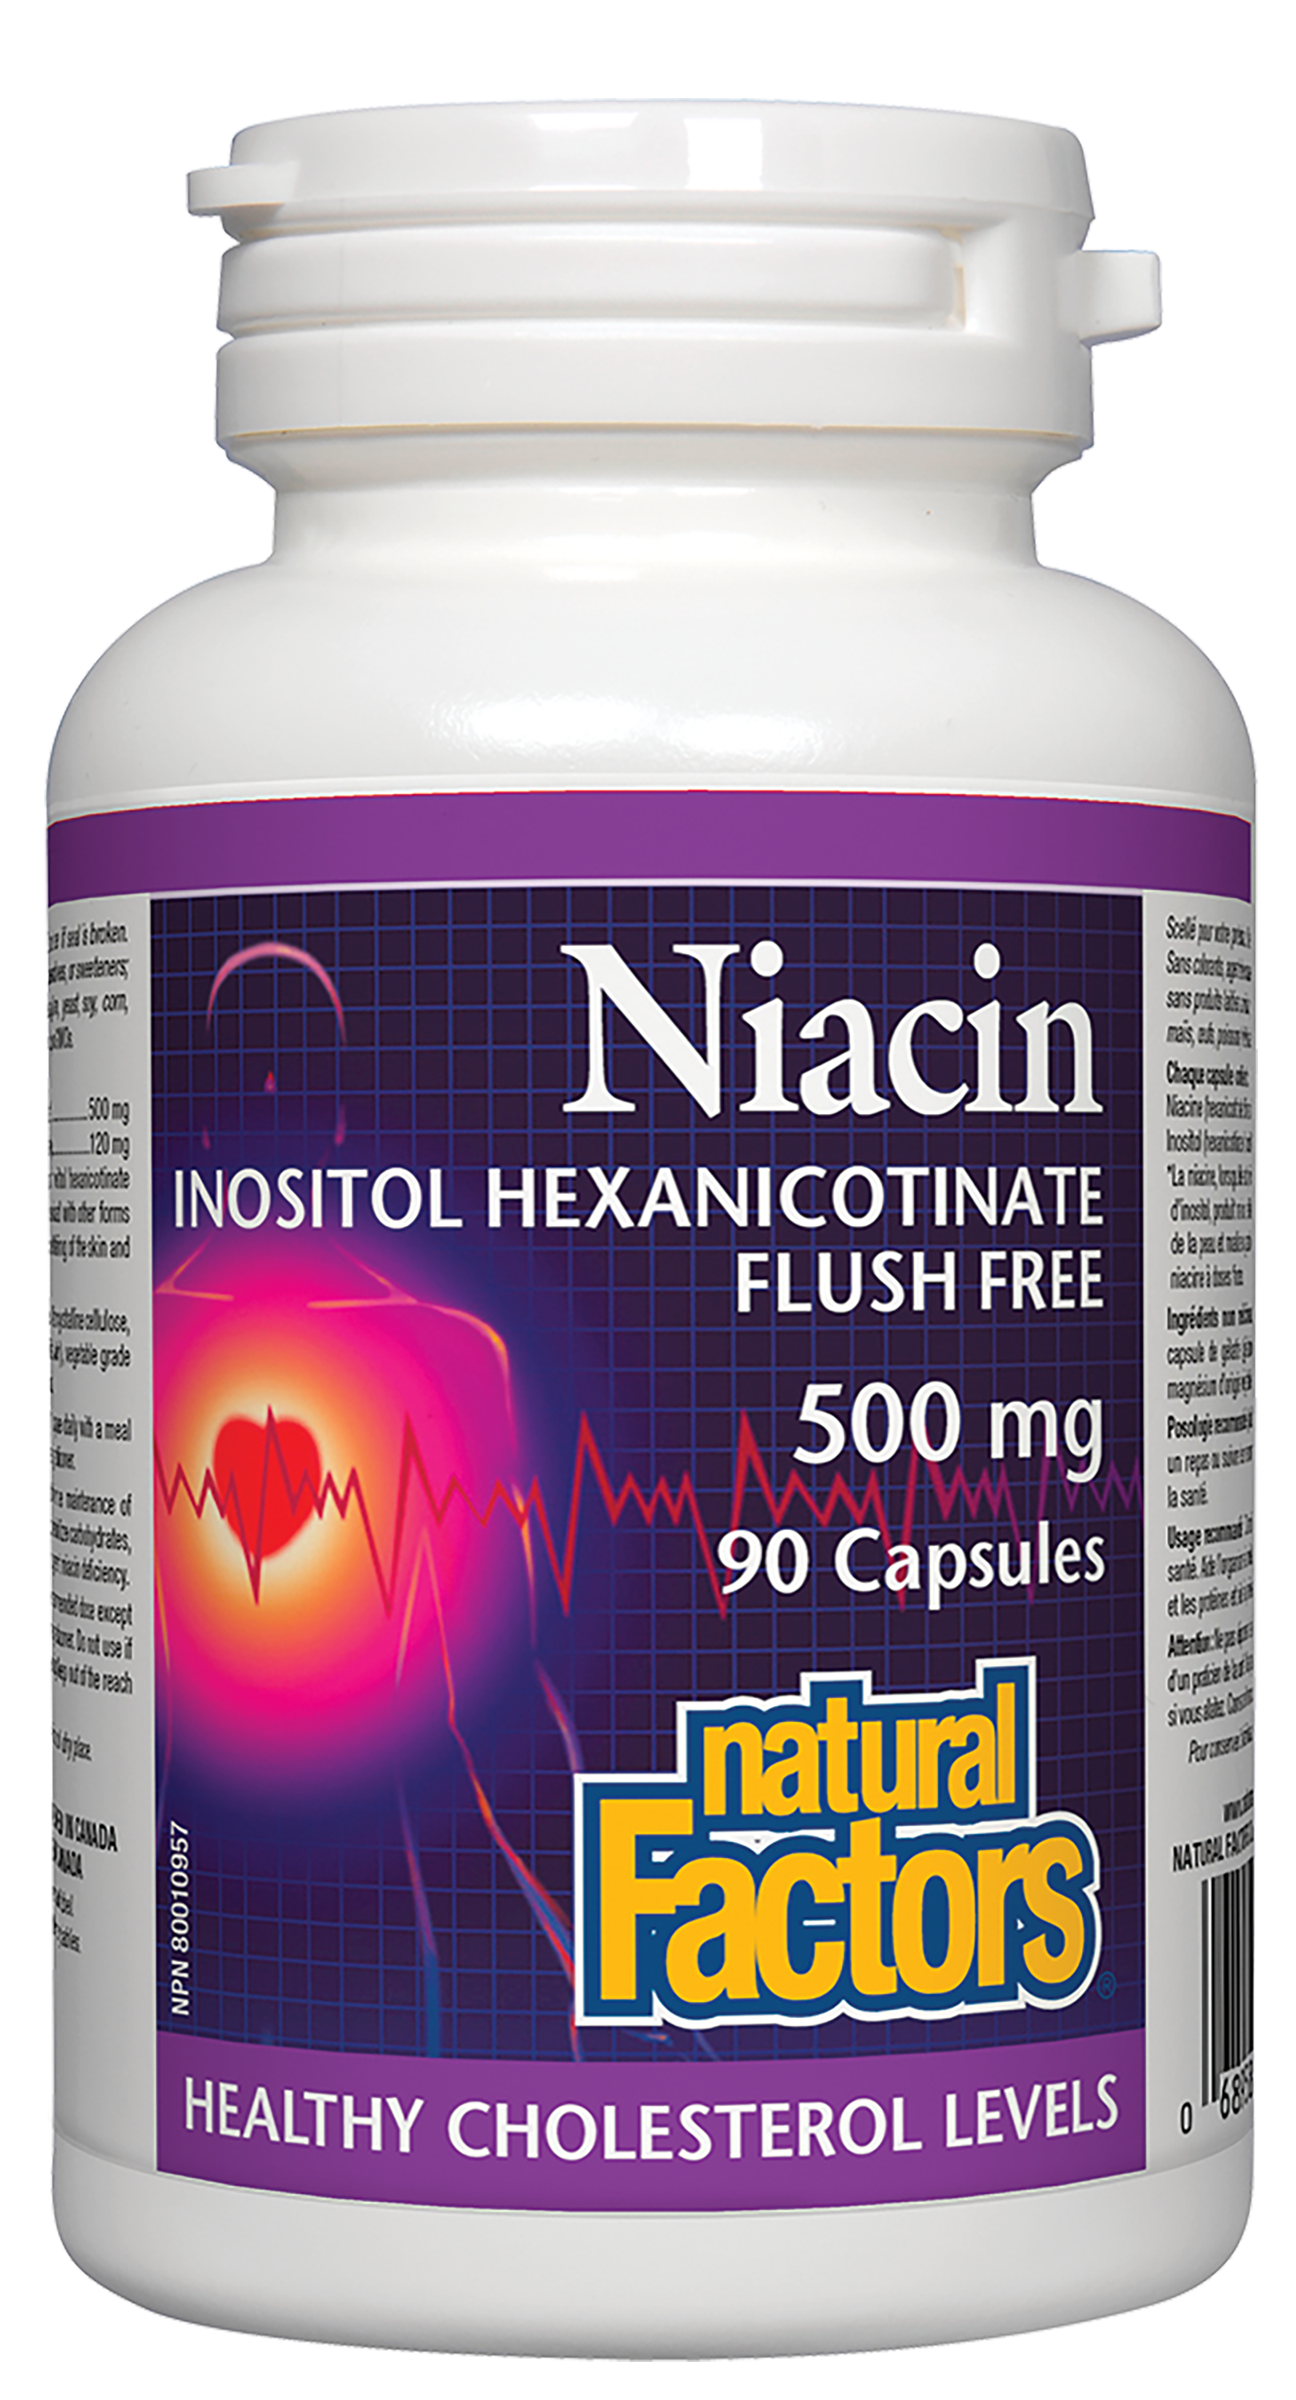 Niacin for carbohydrate utilization